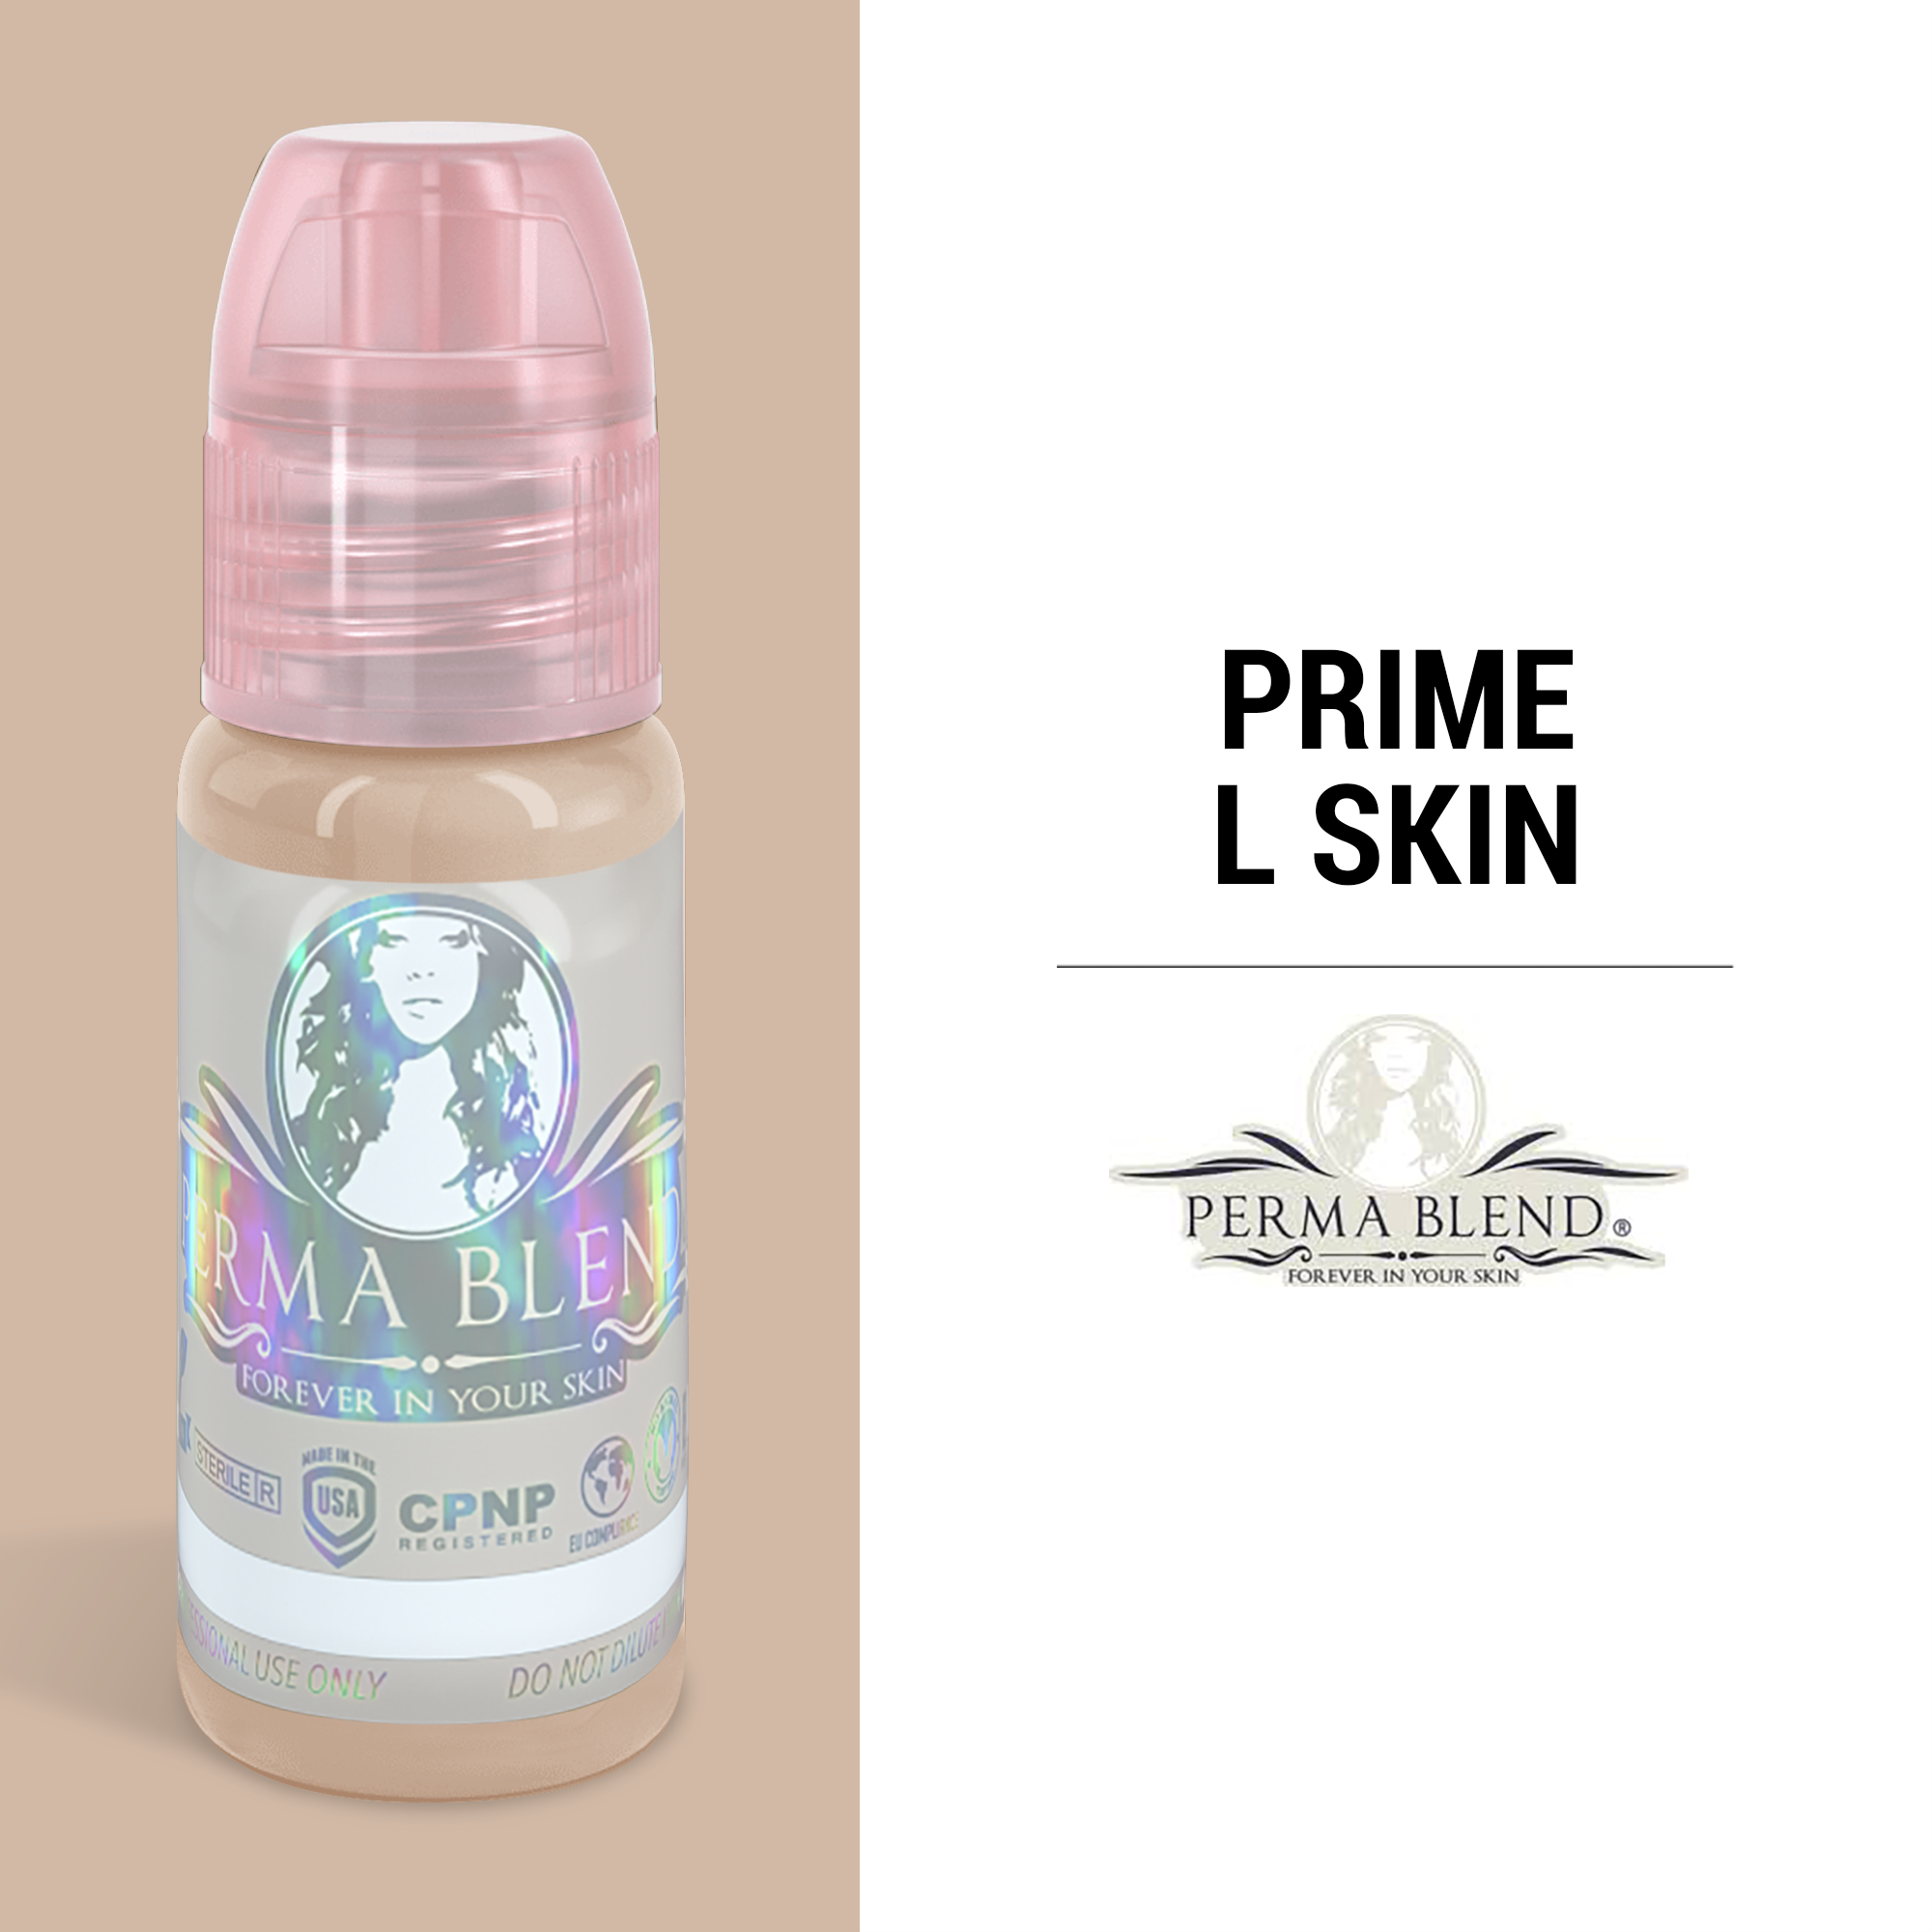 Perma Blend Prime L Skin